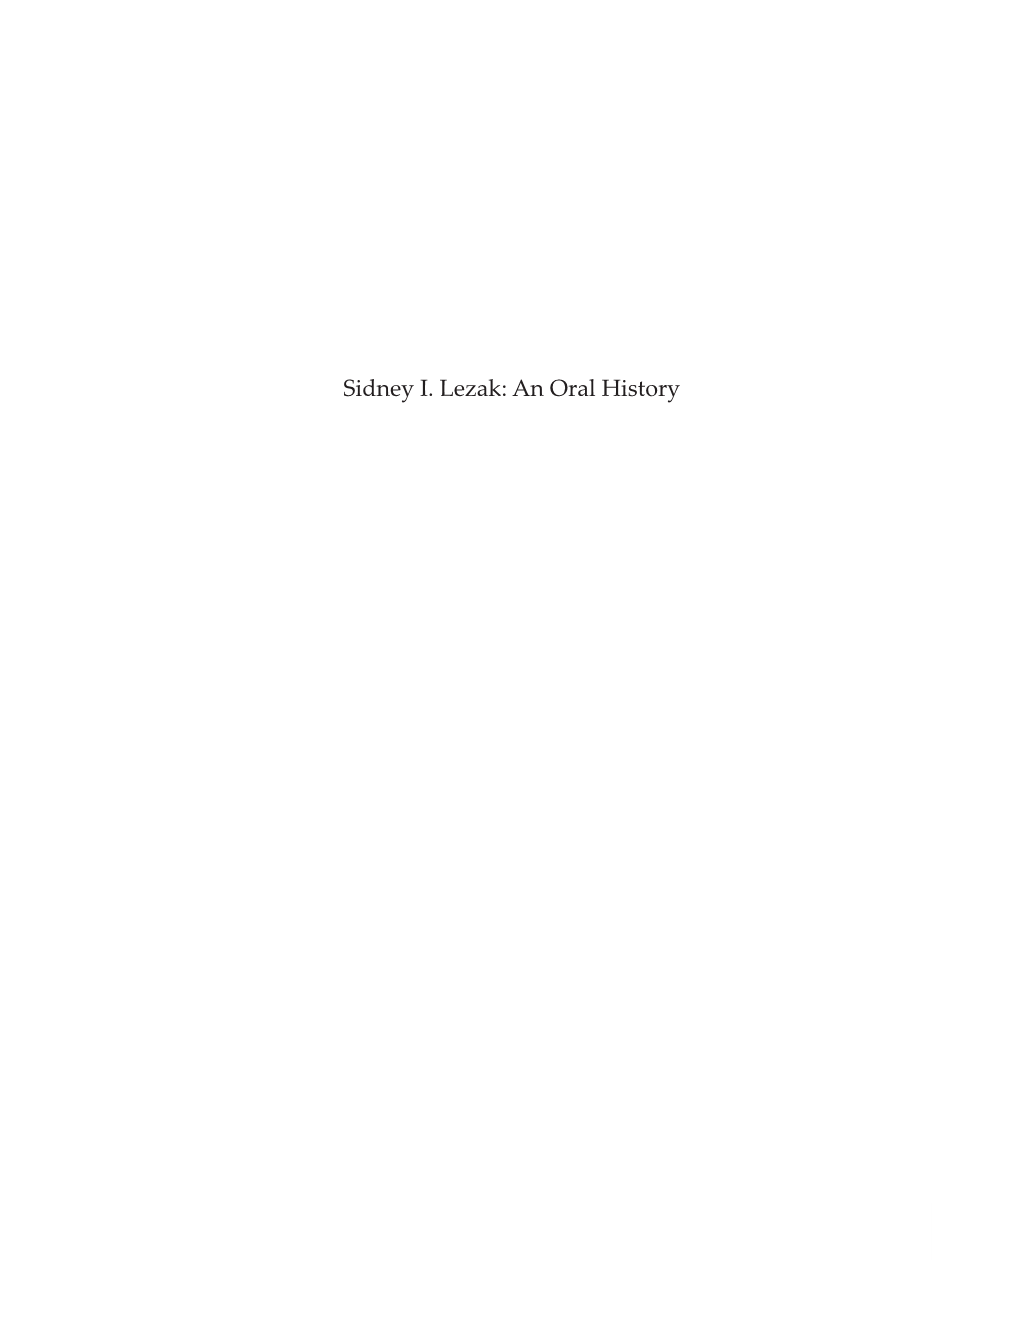 Sidney I. Lezak: an Oral History